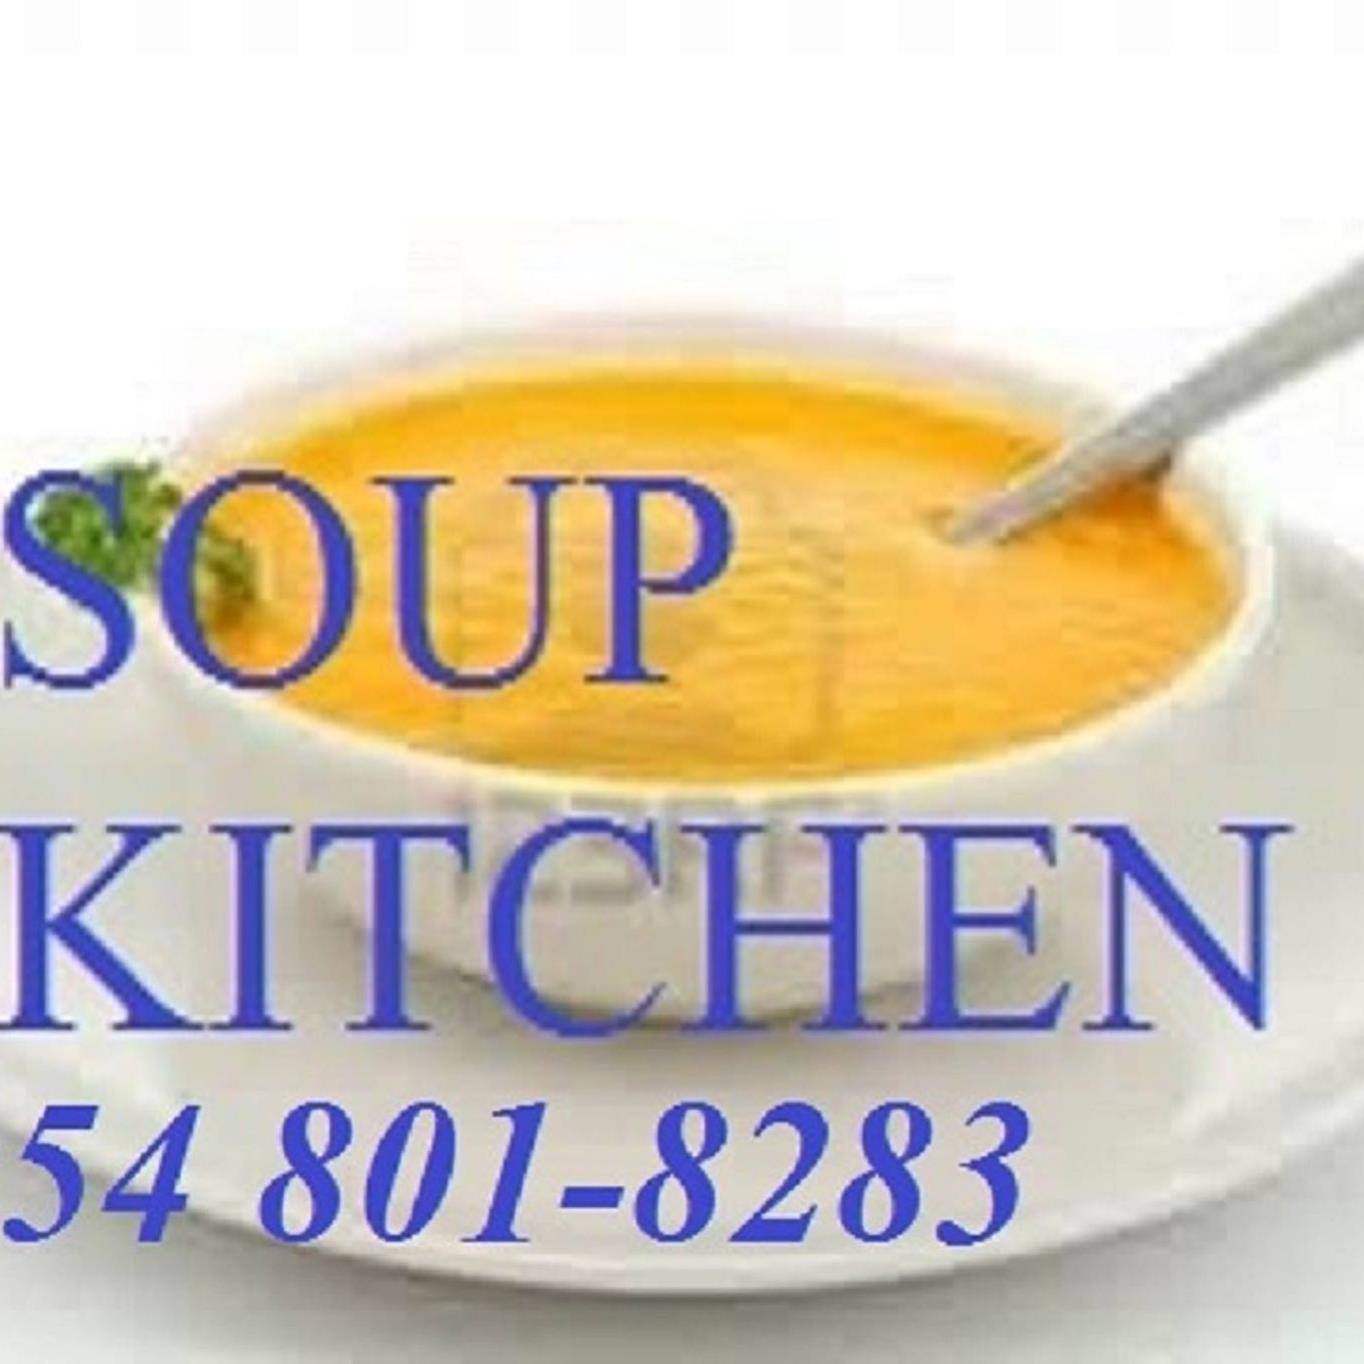 All Saints Catholic Mission Soup Kitchen